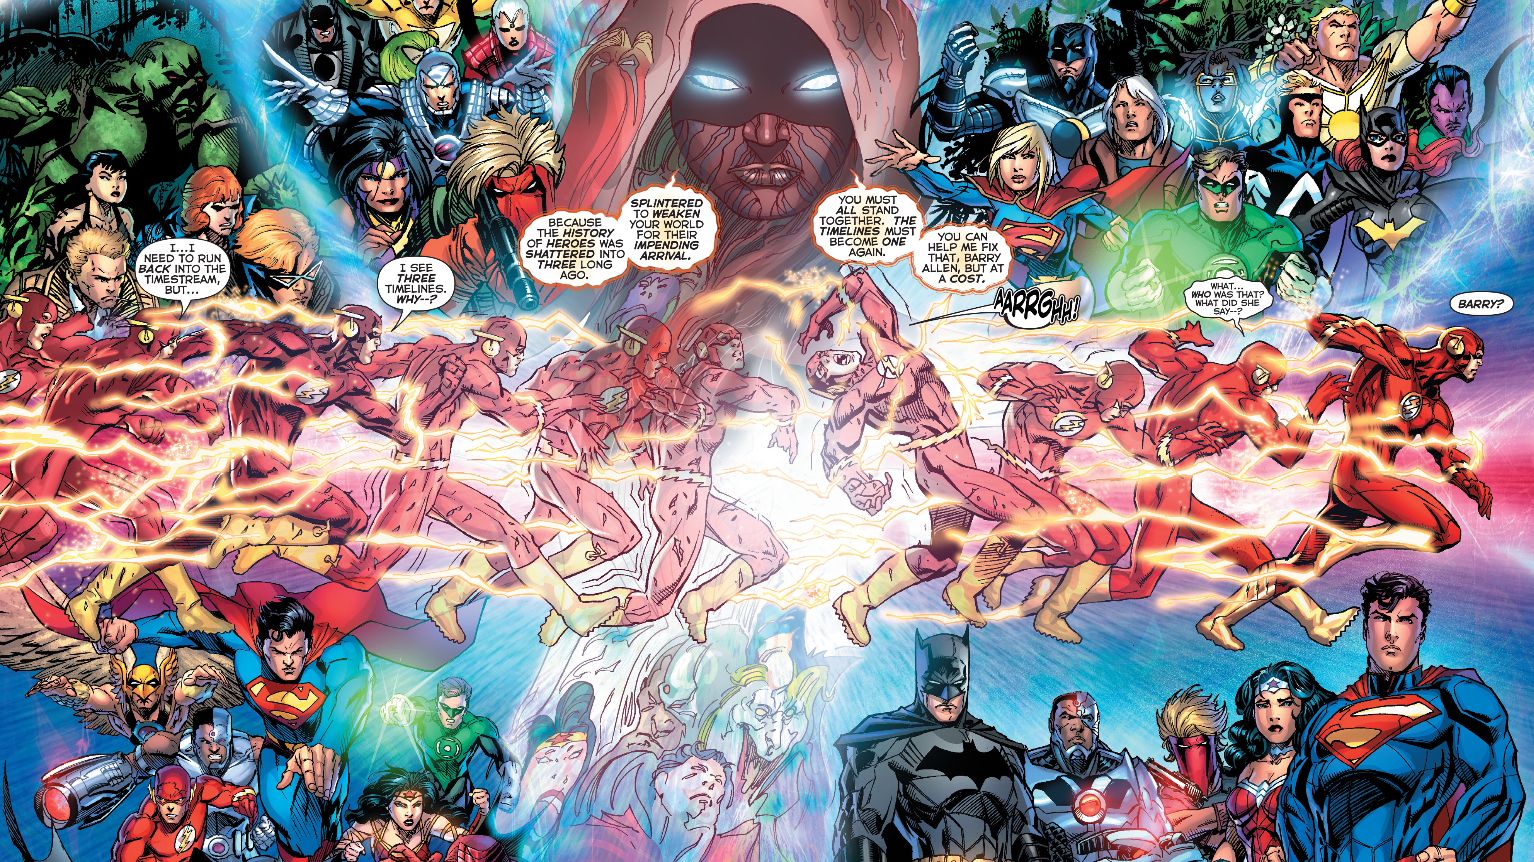 DC Comics Flashpoint